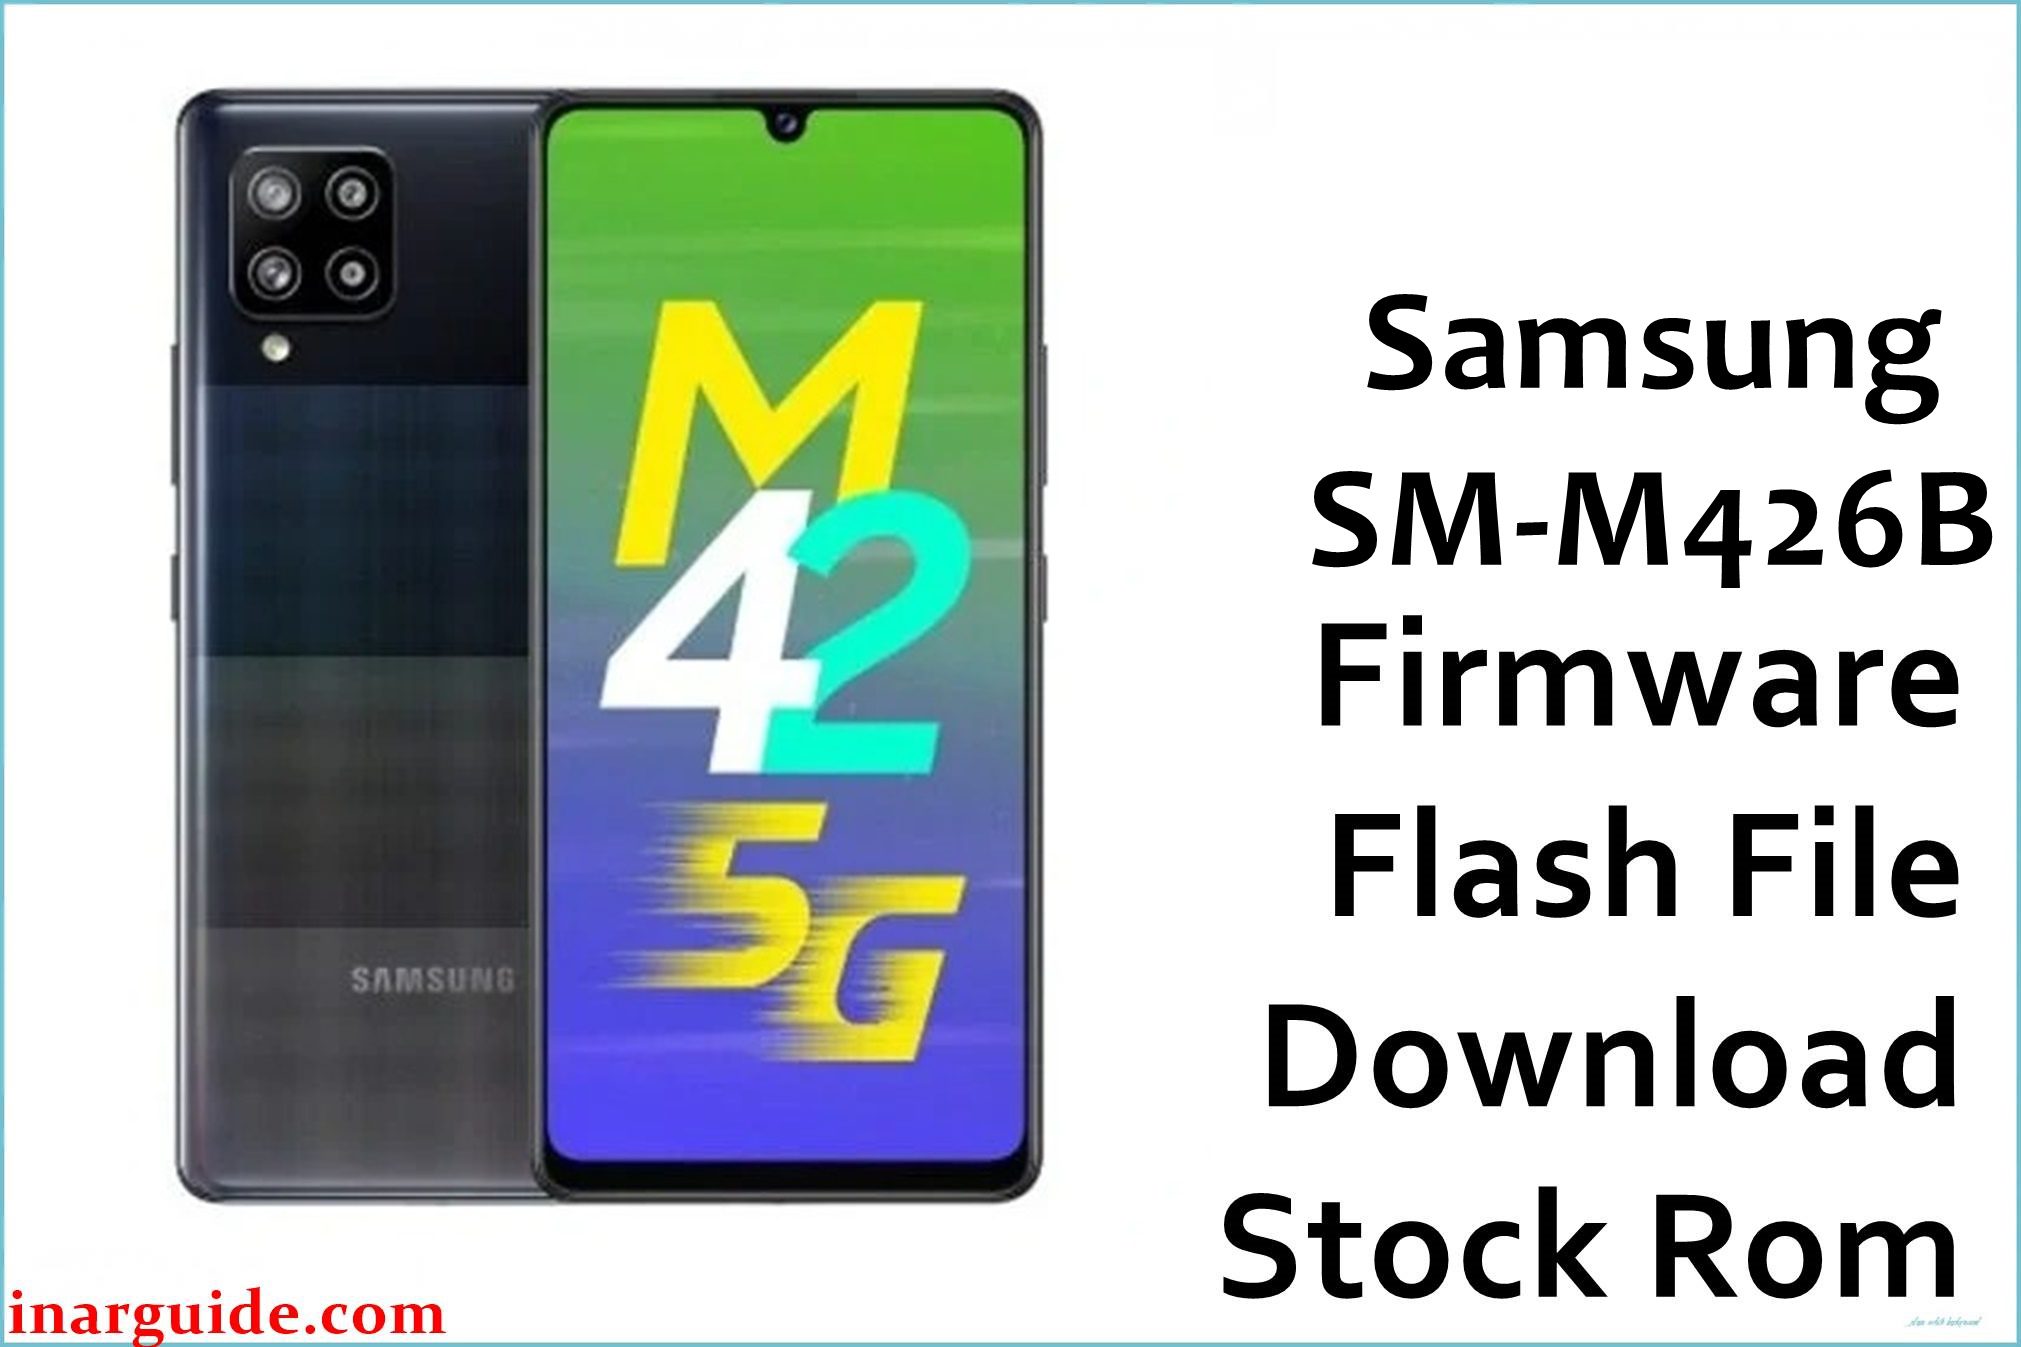 Samsung Galaxy M42 SM-M426B